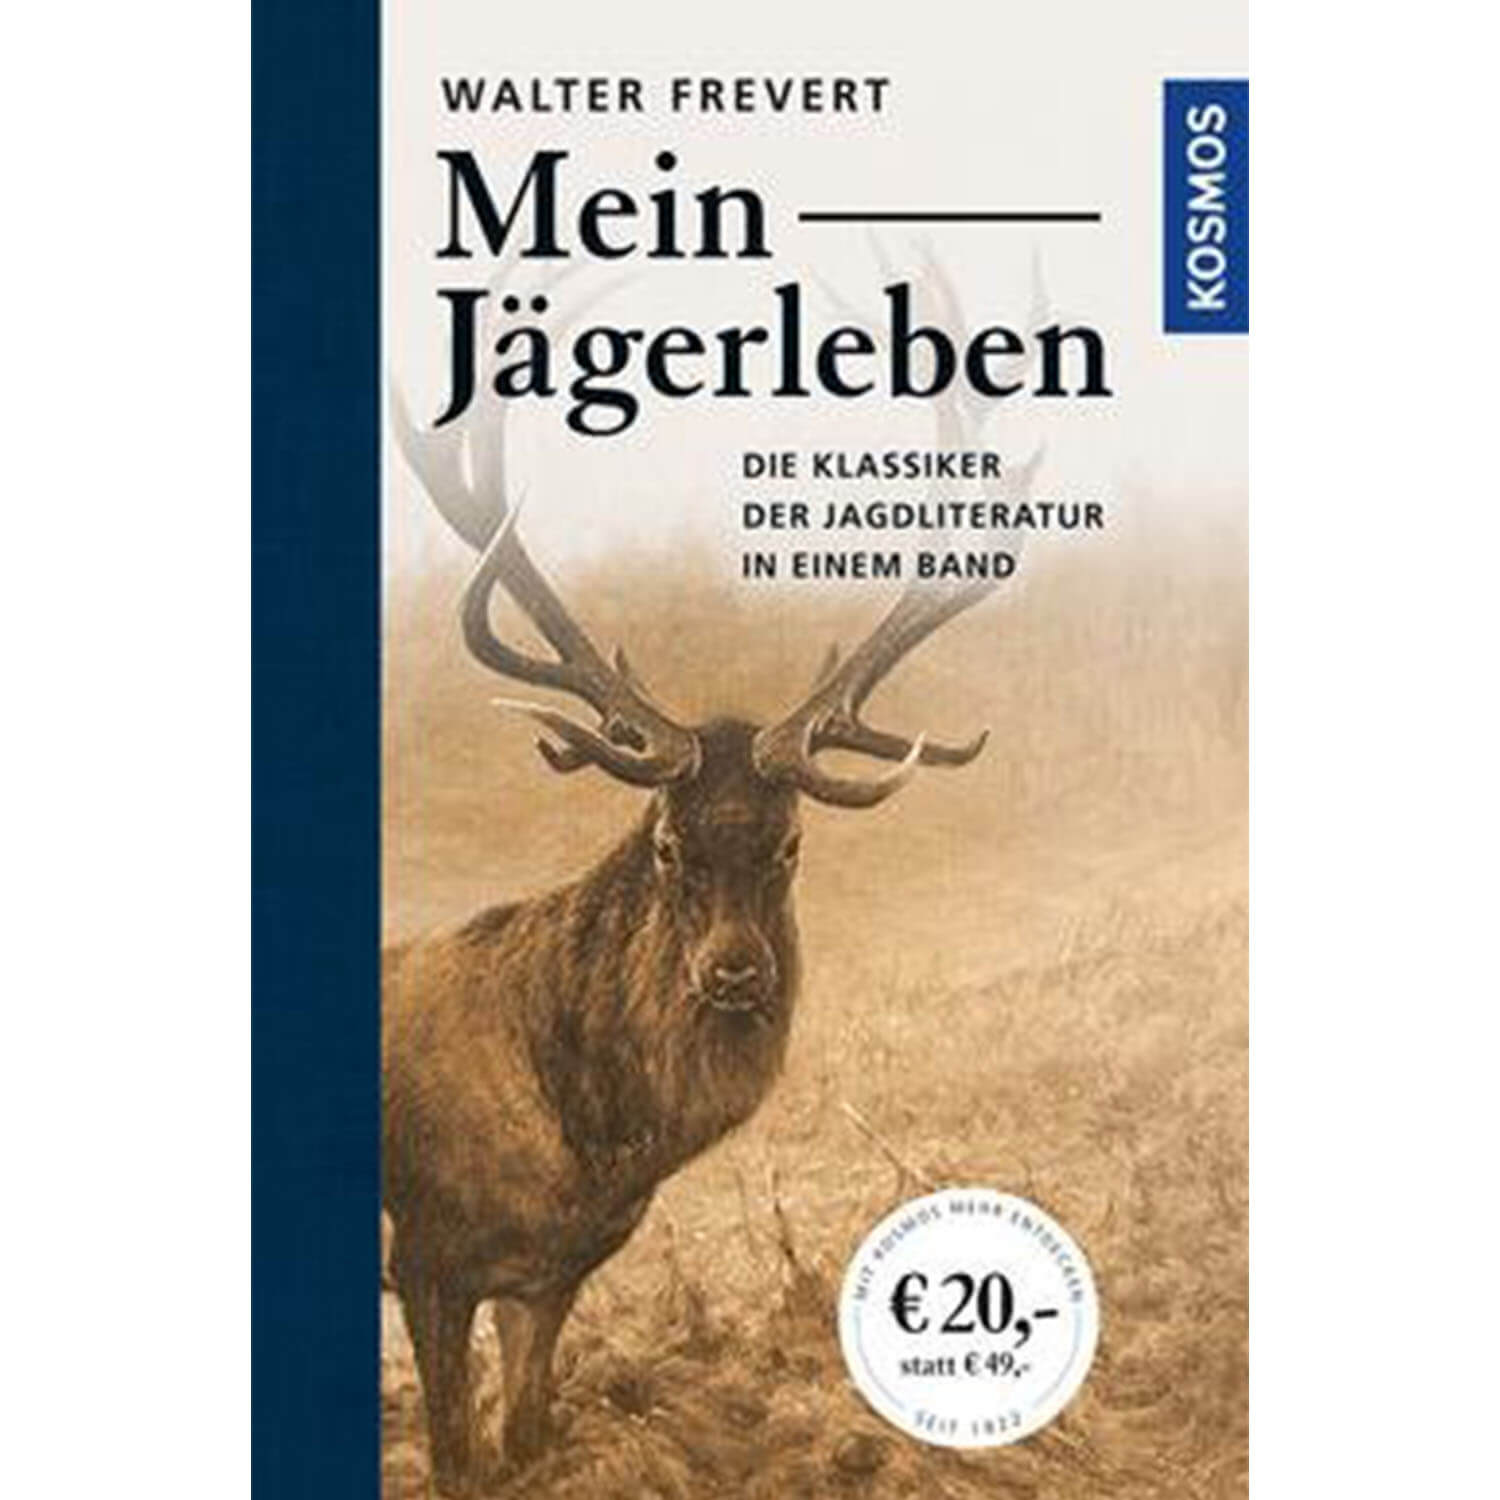 Mein Jägerleben - Buch - Walter Frevert - Jagdausrüstung